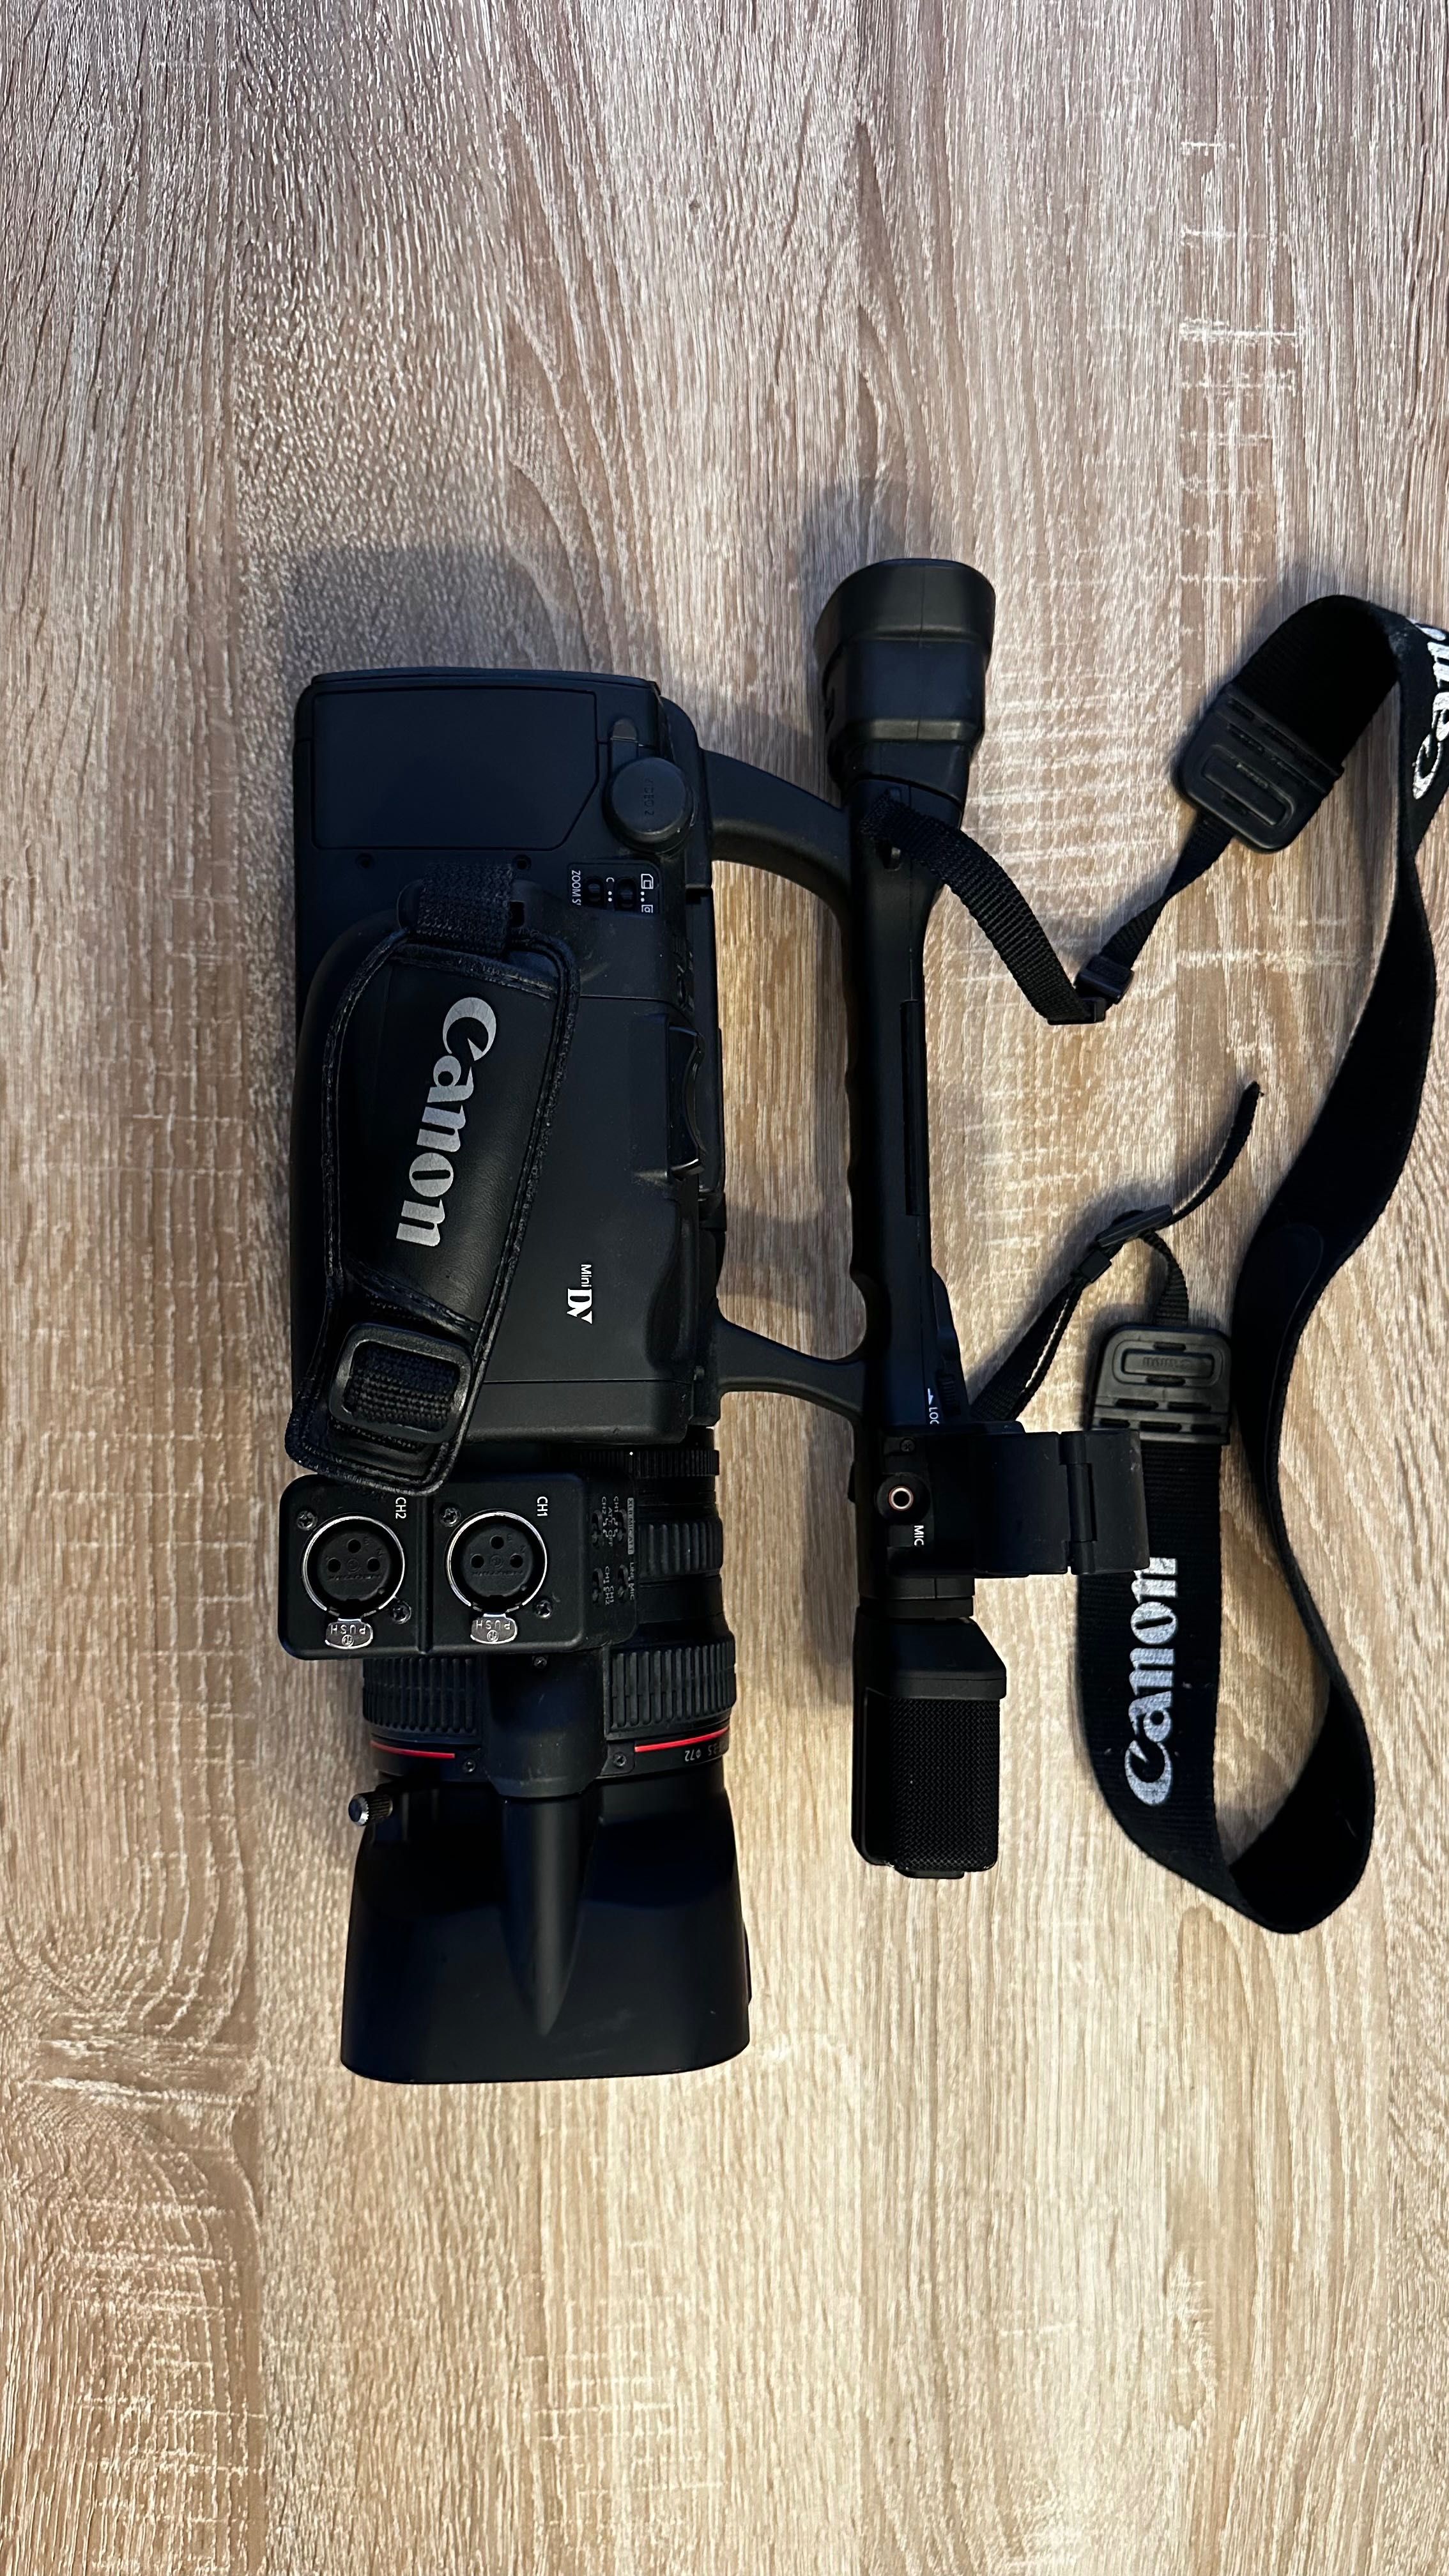 Canon XH A1 HDV 1080i camera video profesionala DEFECTA piese